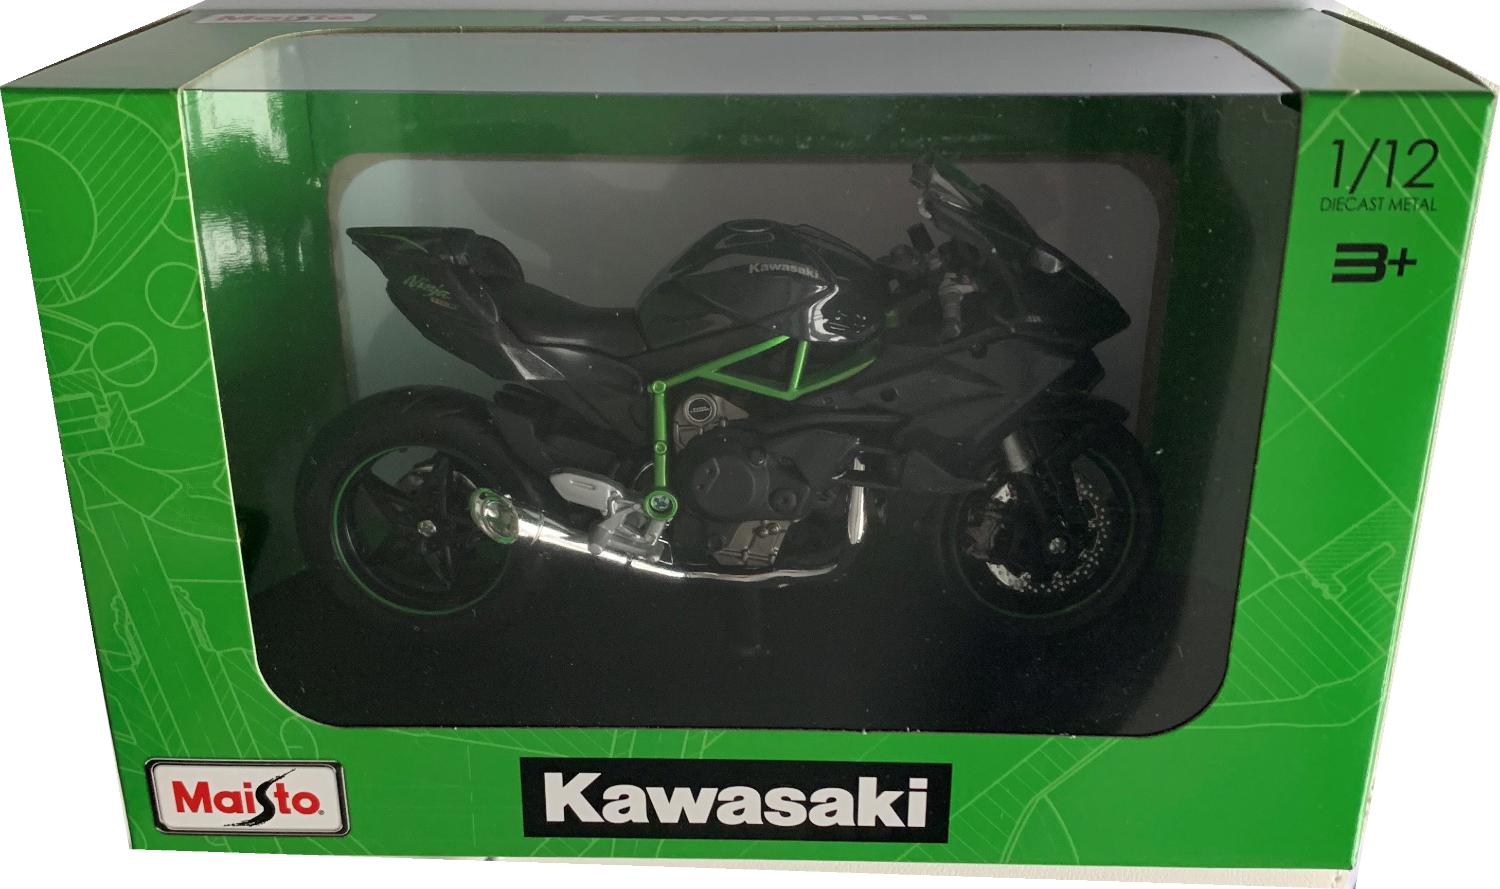 Kawasaki Ninja H2 R in dark grey 1:12 scale model from Maisto, mounted on  a plinth, presented in  a green Kawasaki themed box.